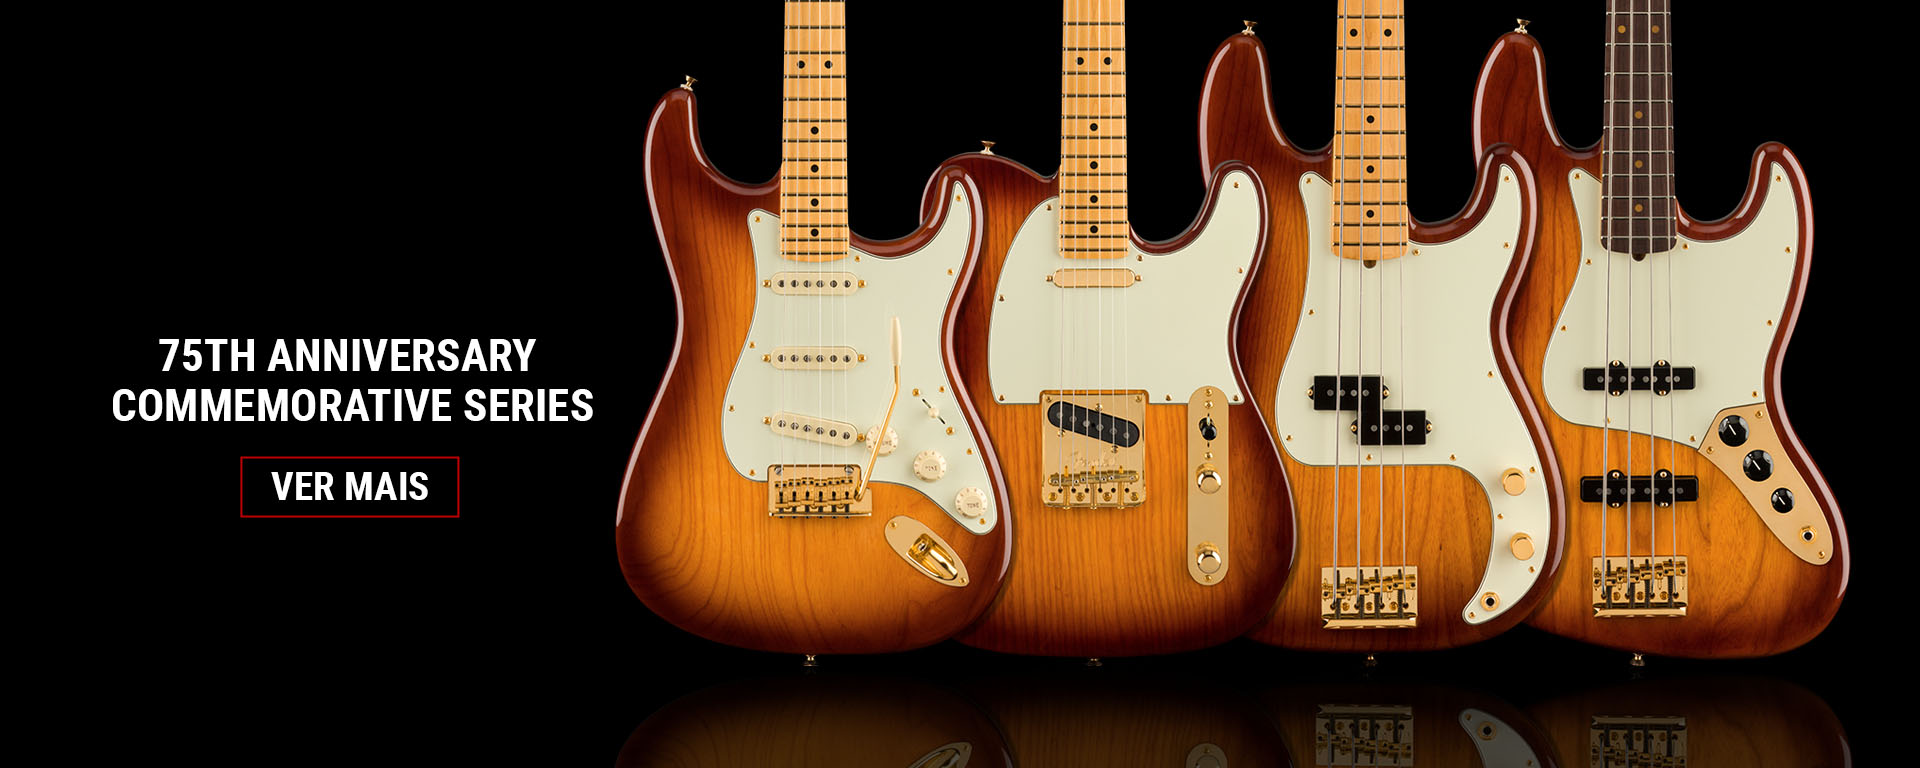 Guitarras Fender 75th Anniversary